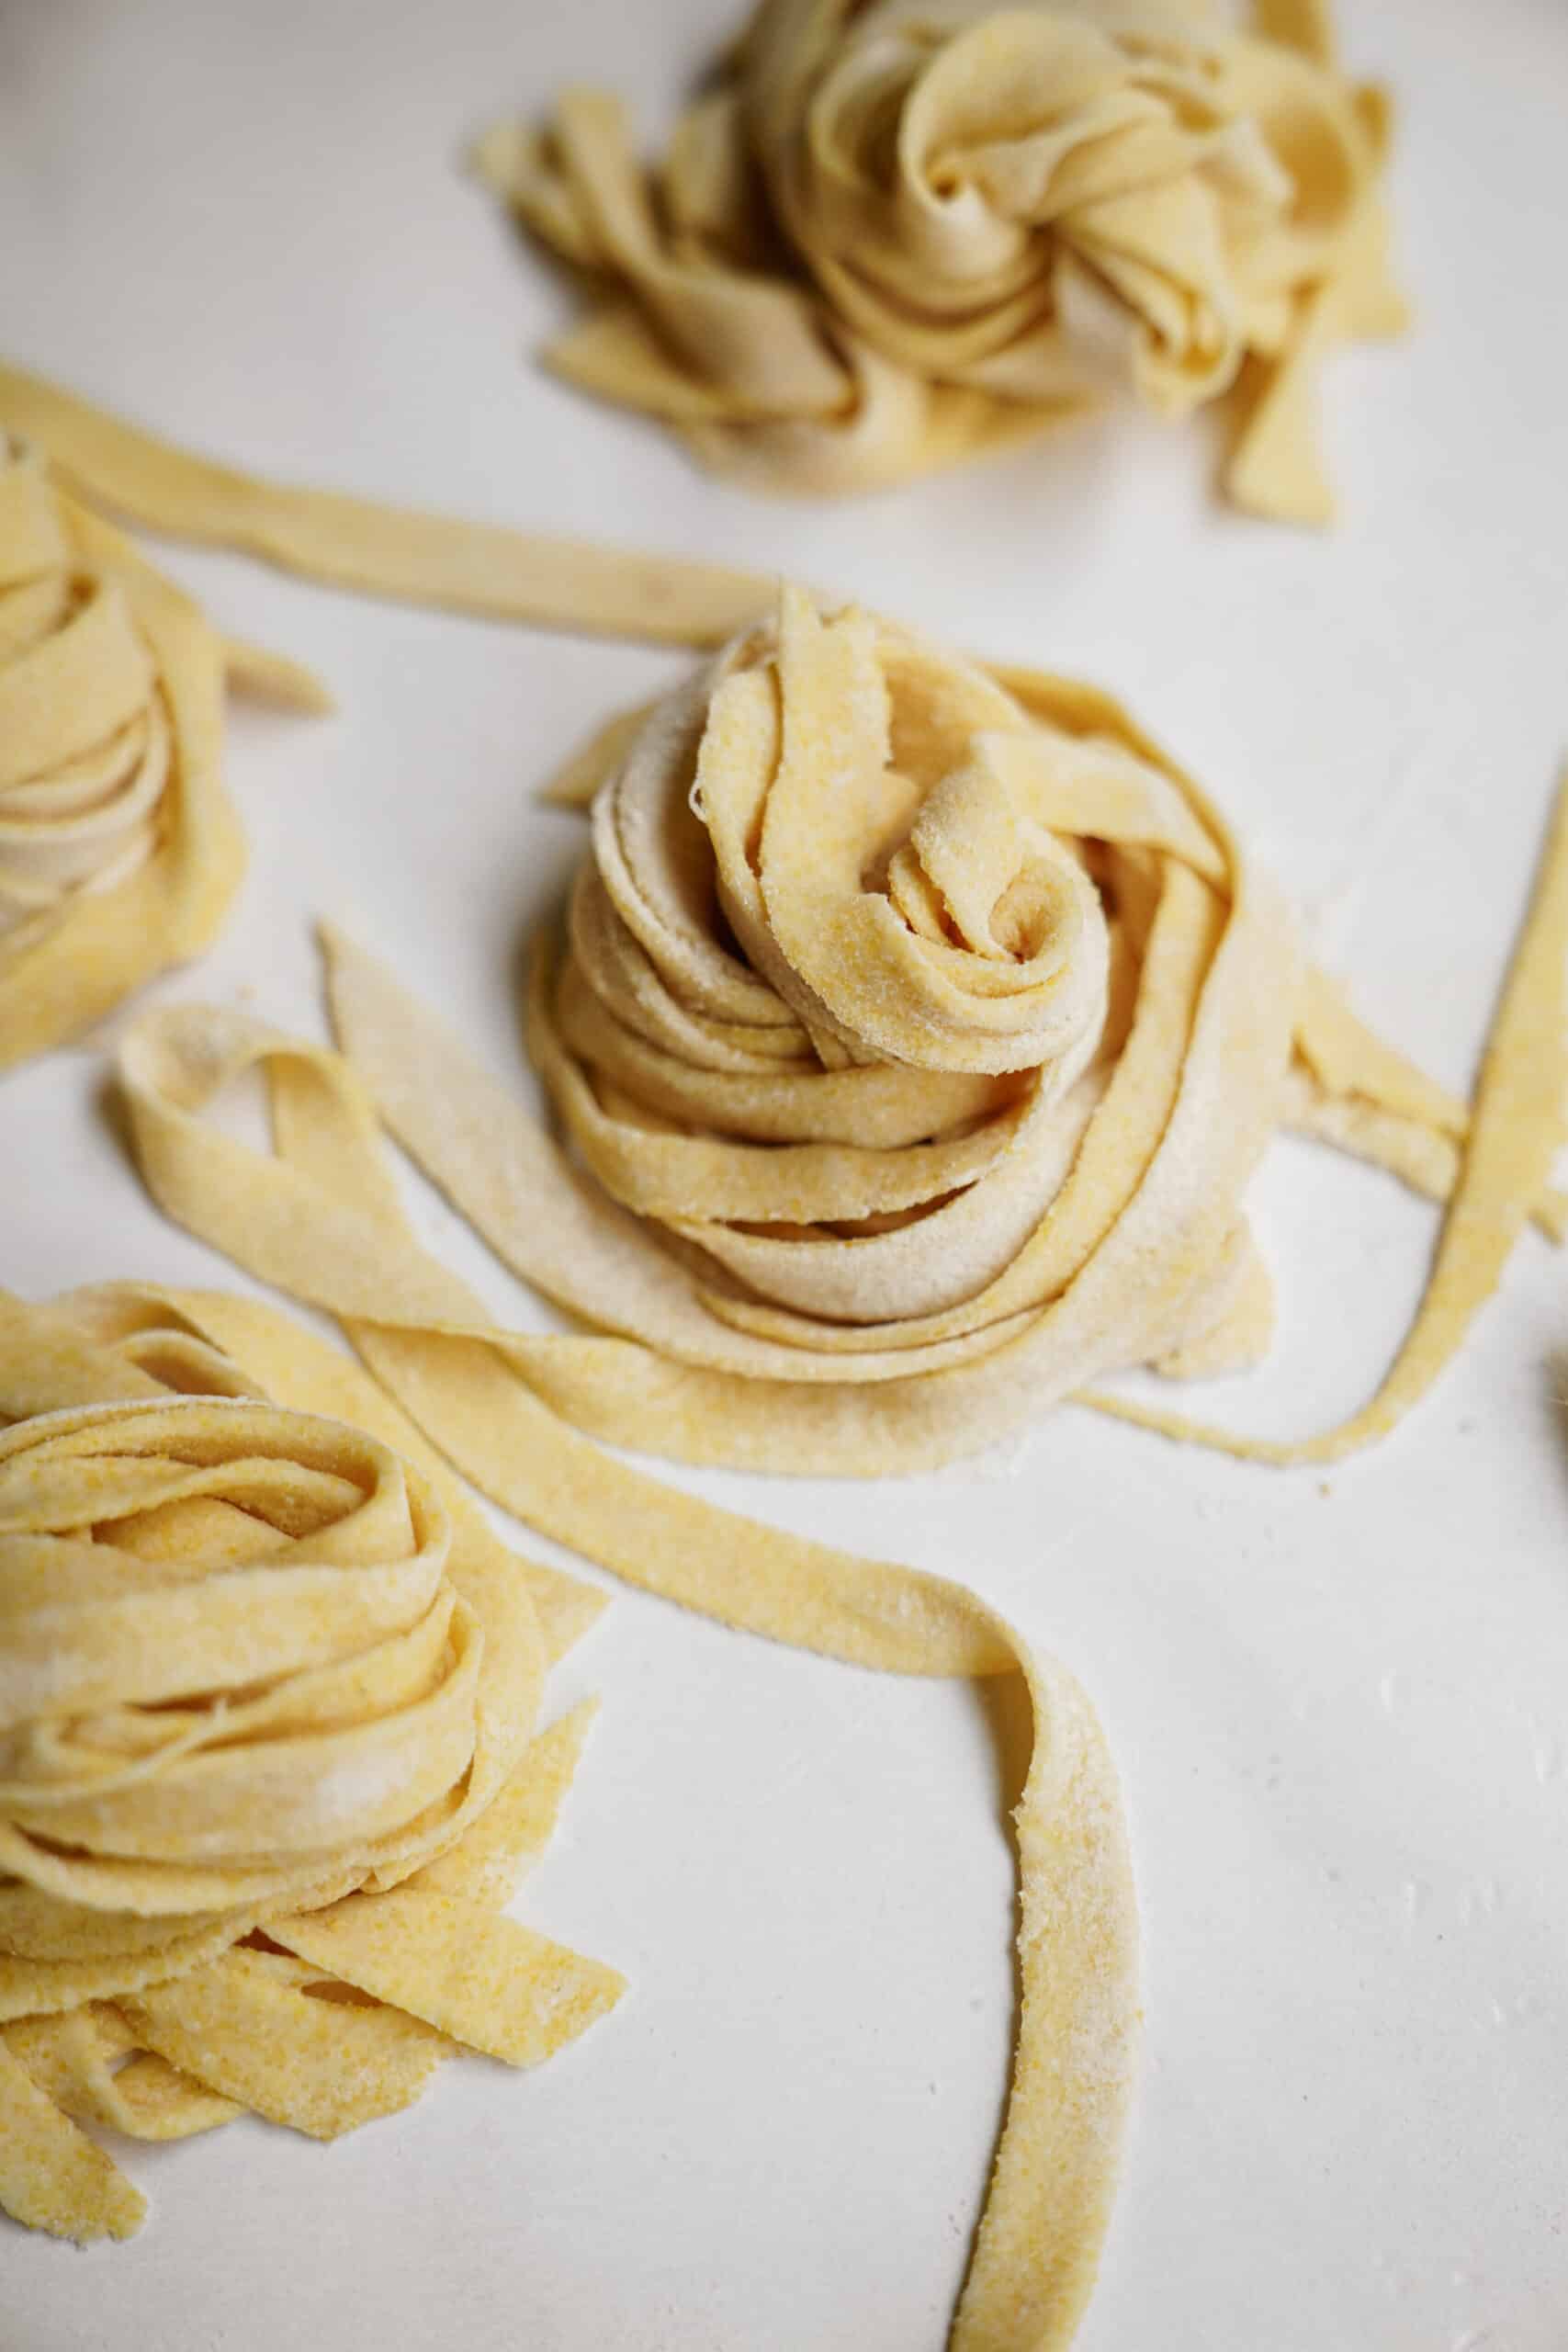 Homemade pasta in nests